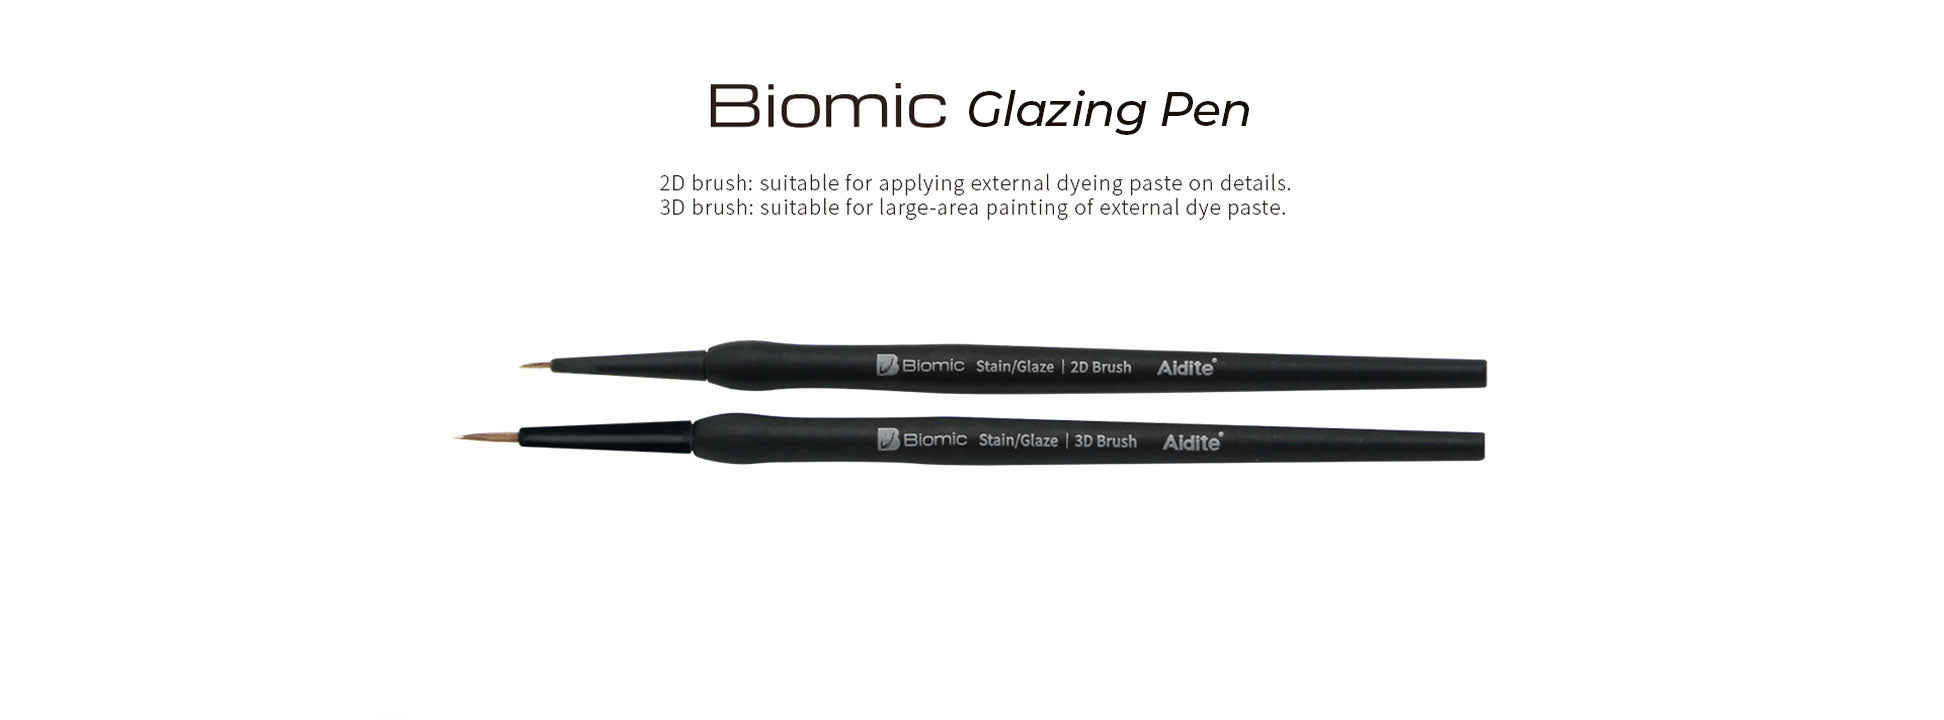 Aidite Biomic Glazing Pen